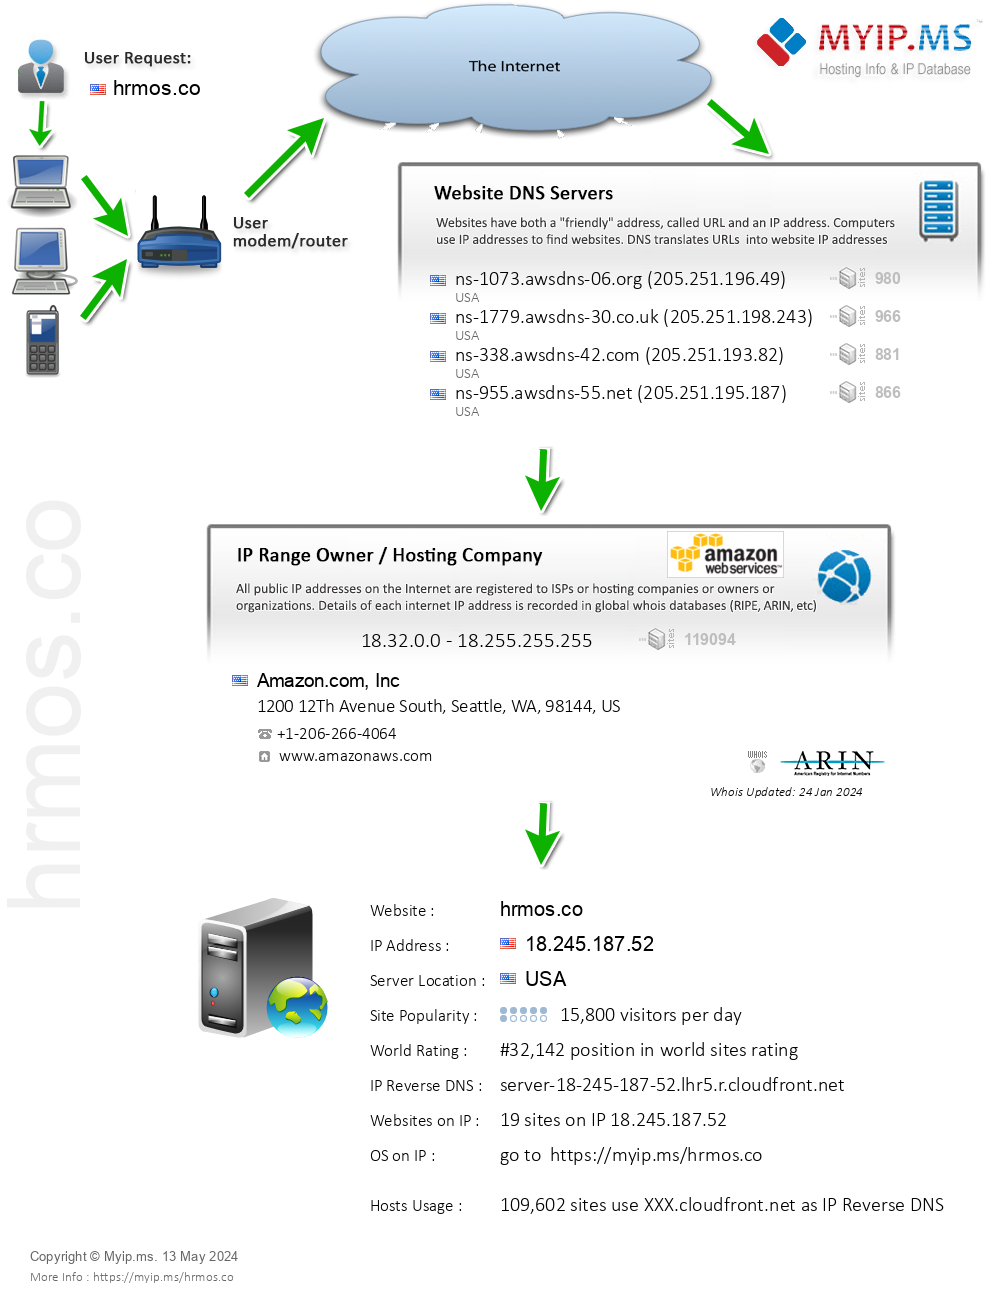 Hrmos.co - Website Hosting Visual IP Diagram